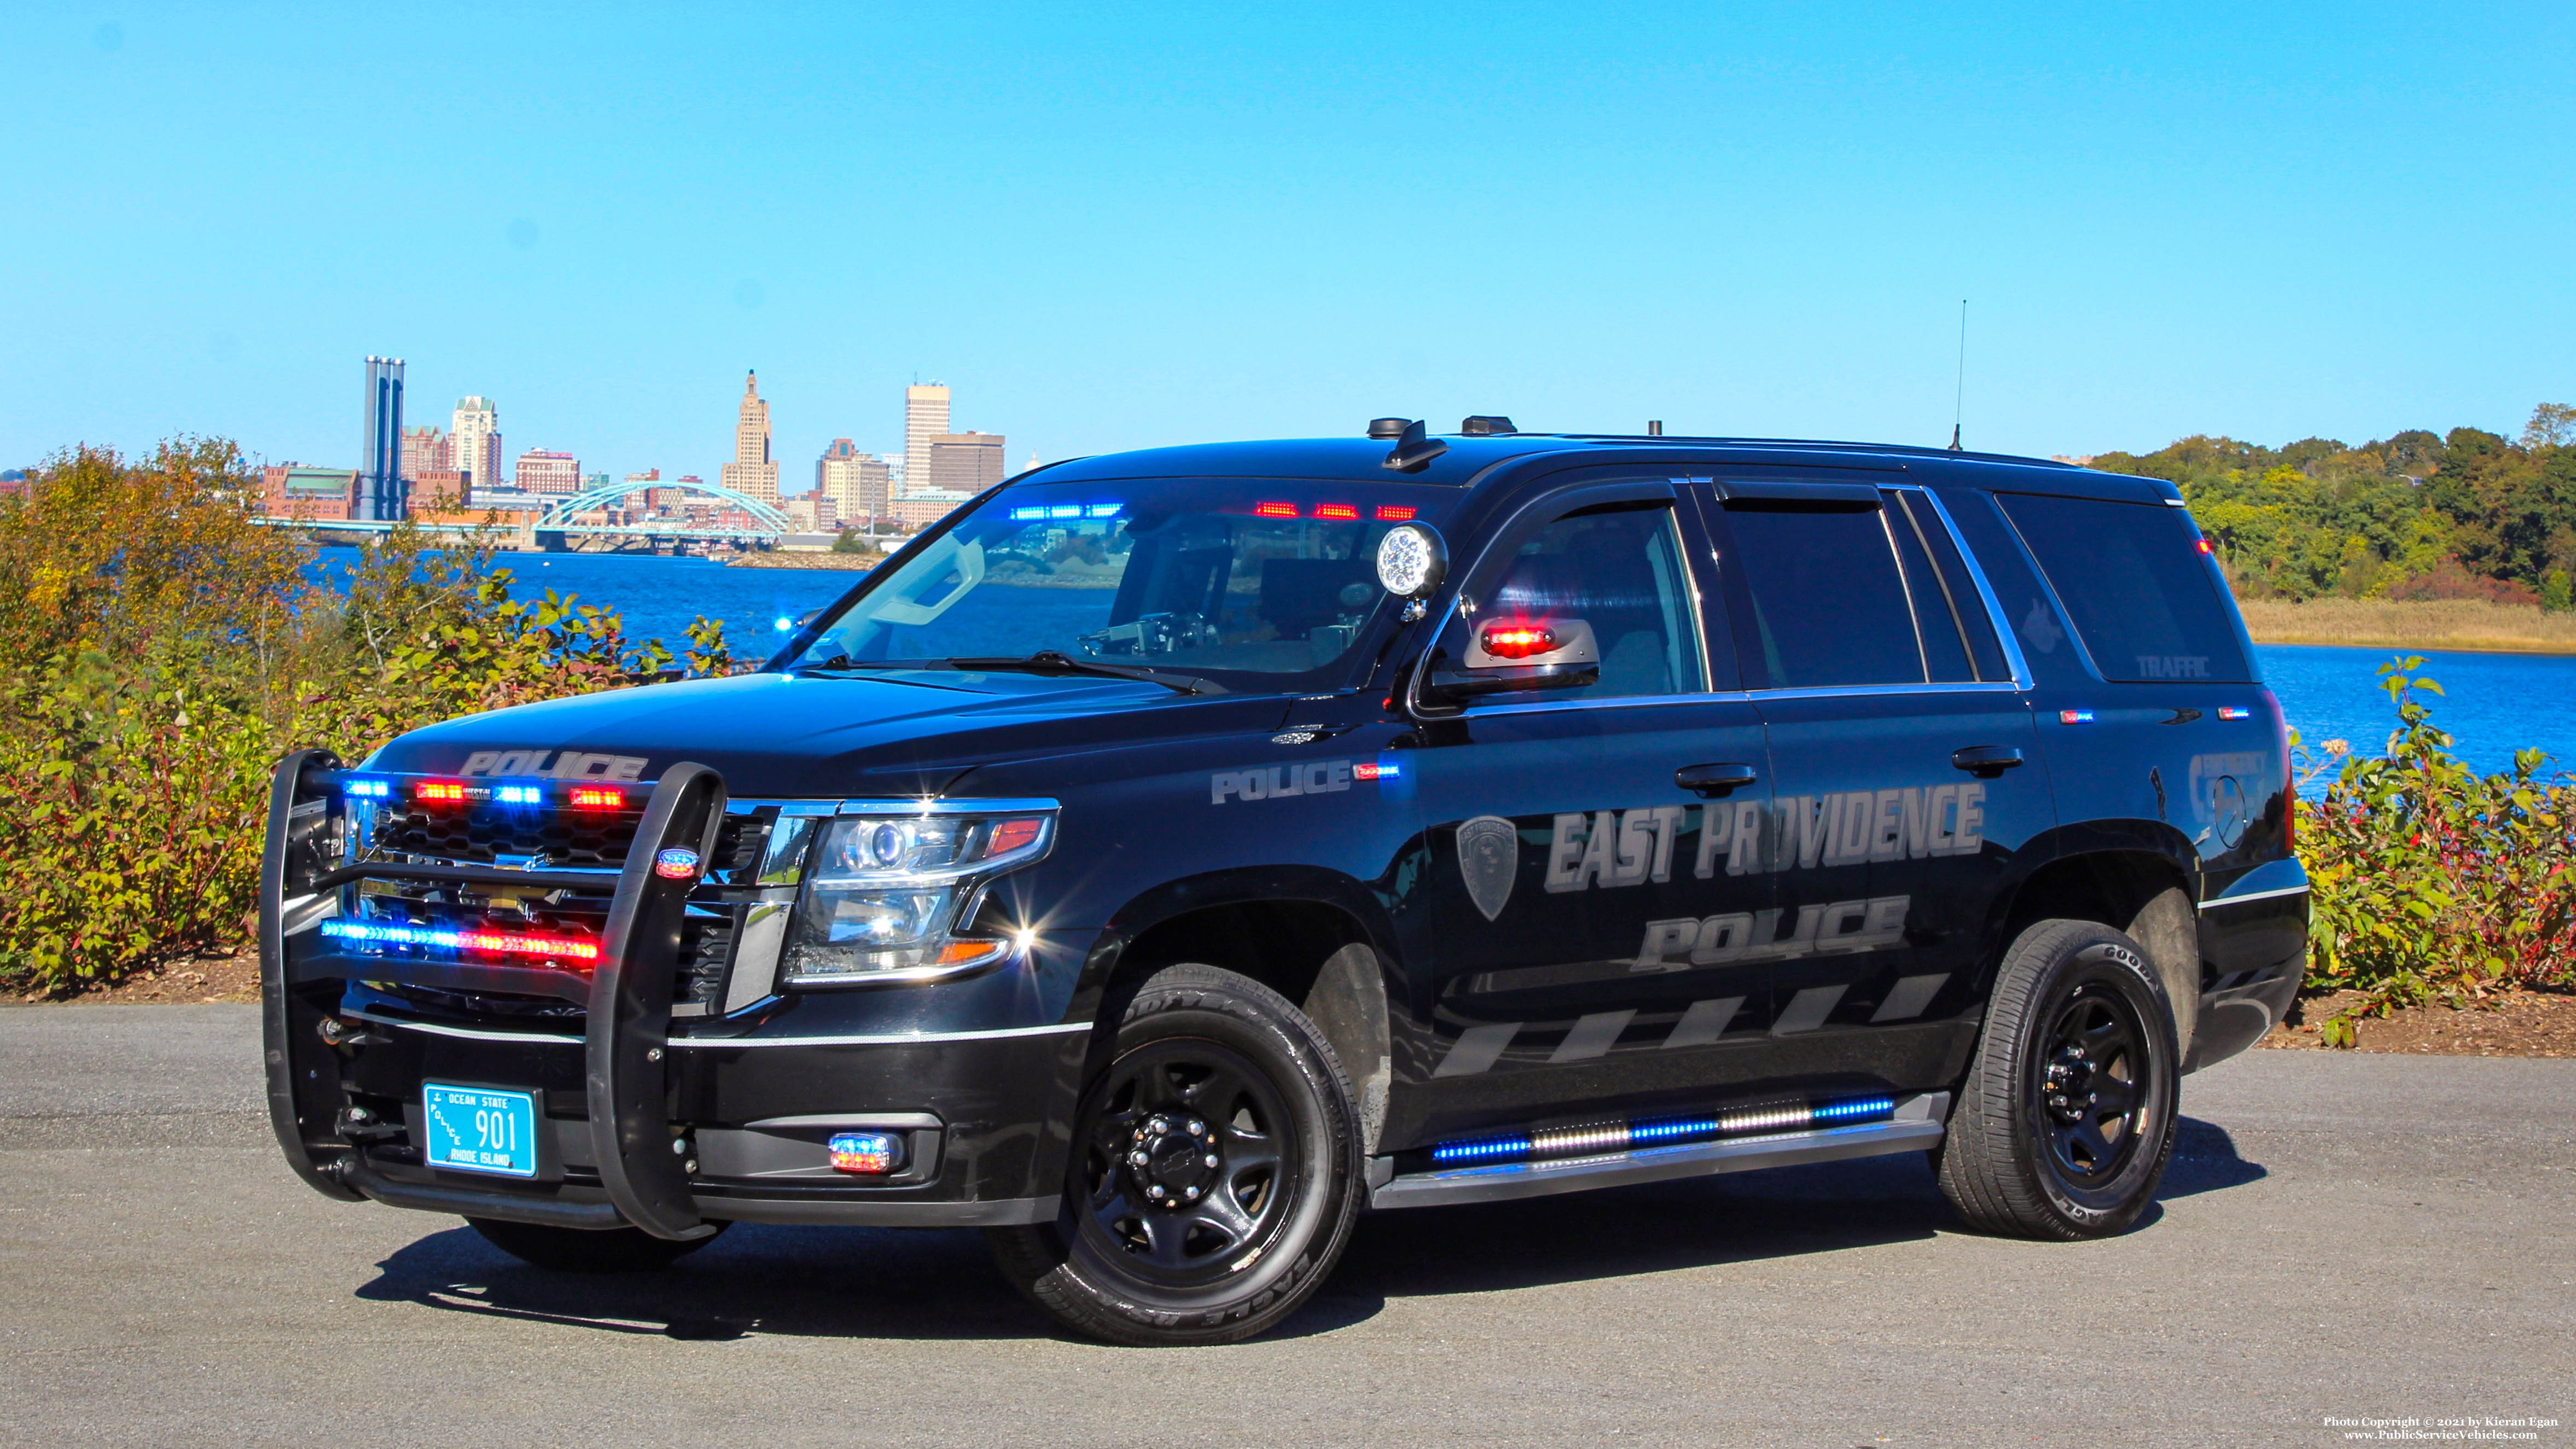 A photo  of East Providence Police
            Car [2]33, a 2016 Chevrolet Tahoe             taken by Kieran Egan